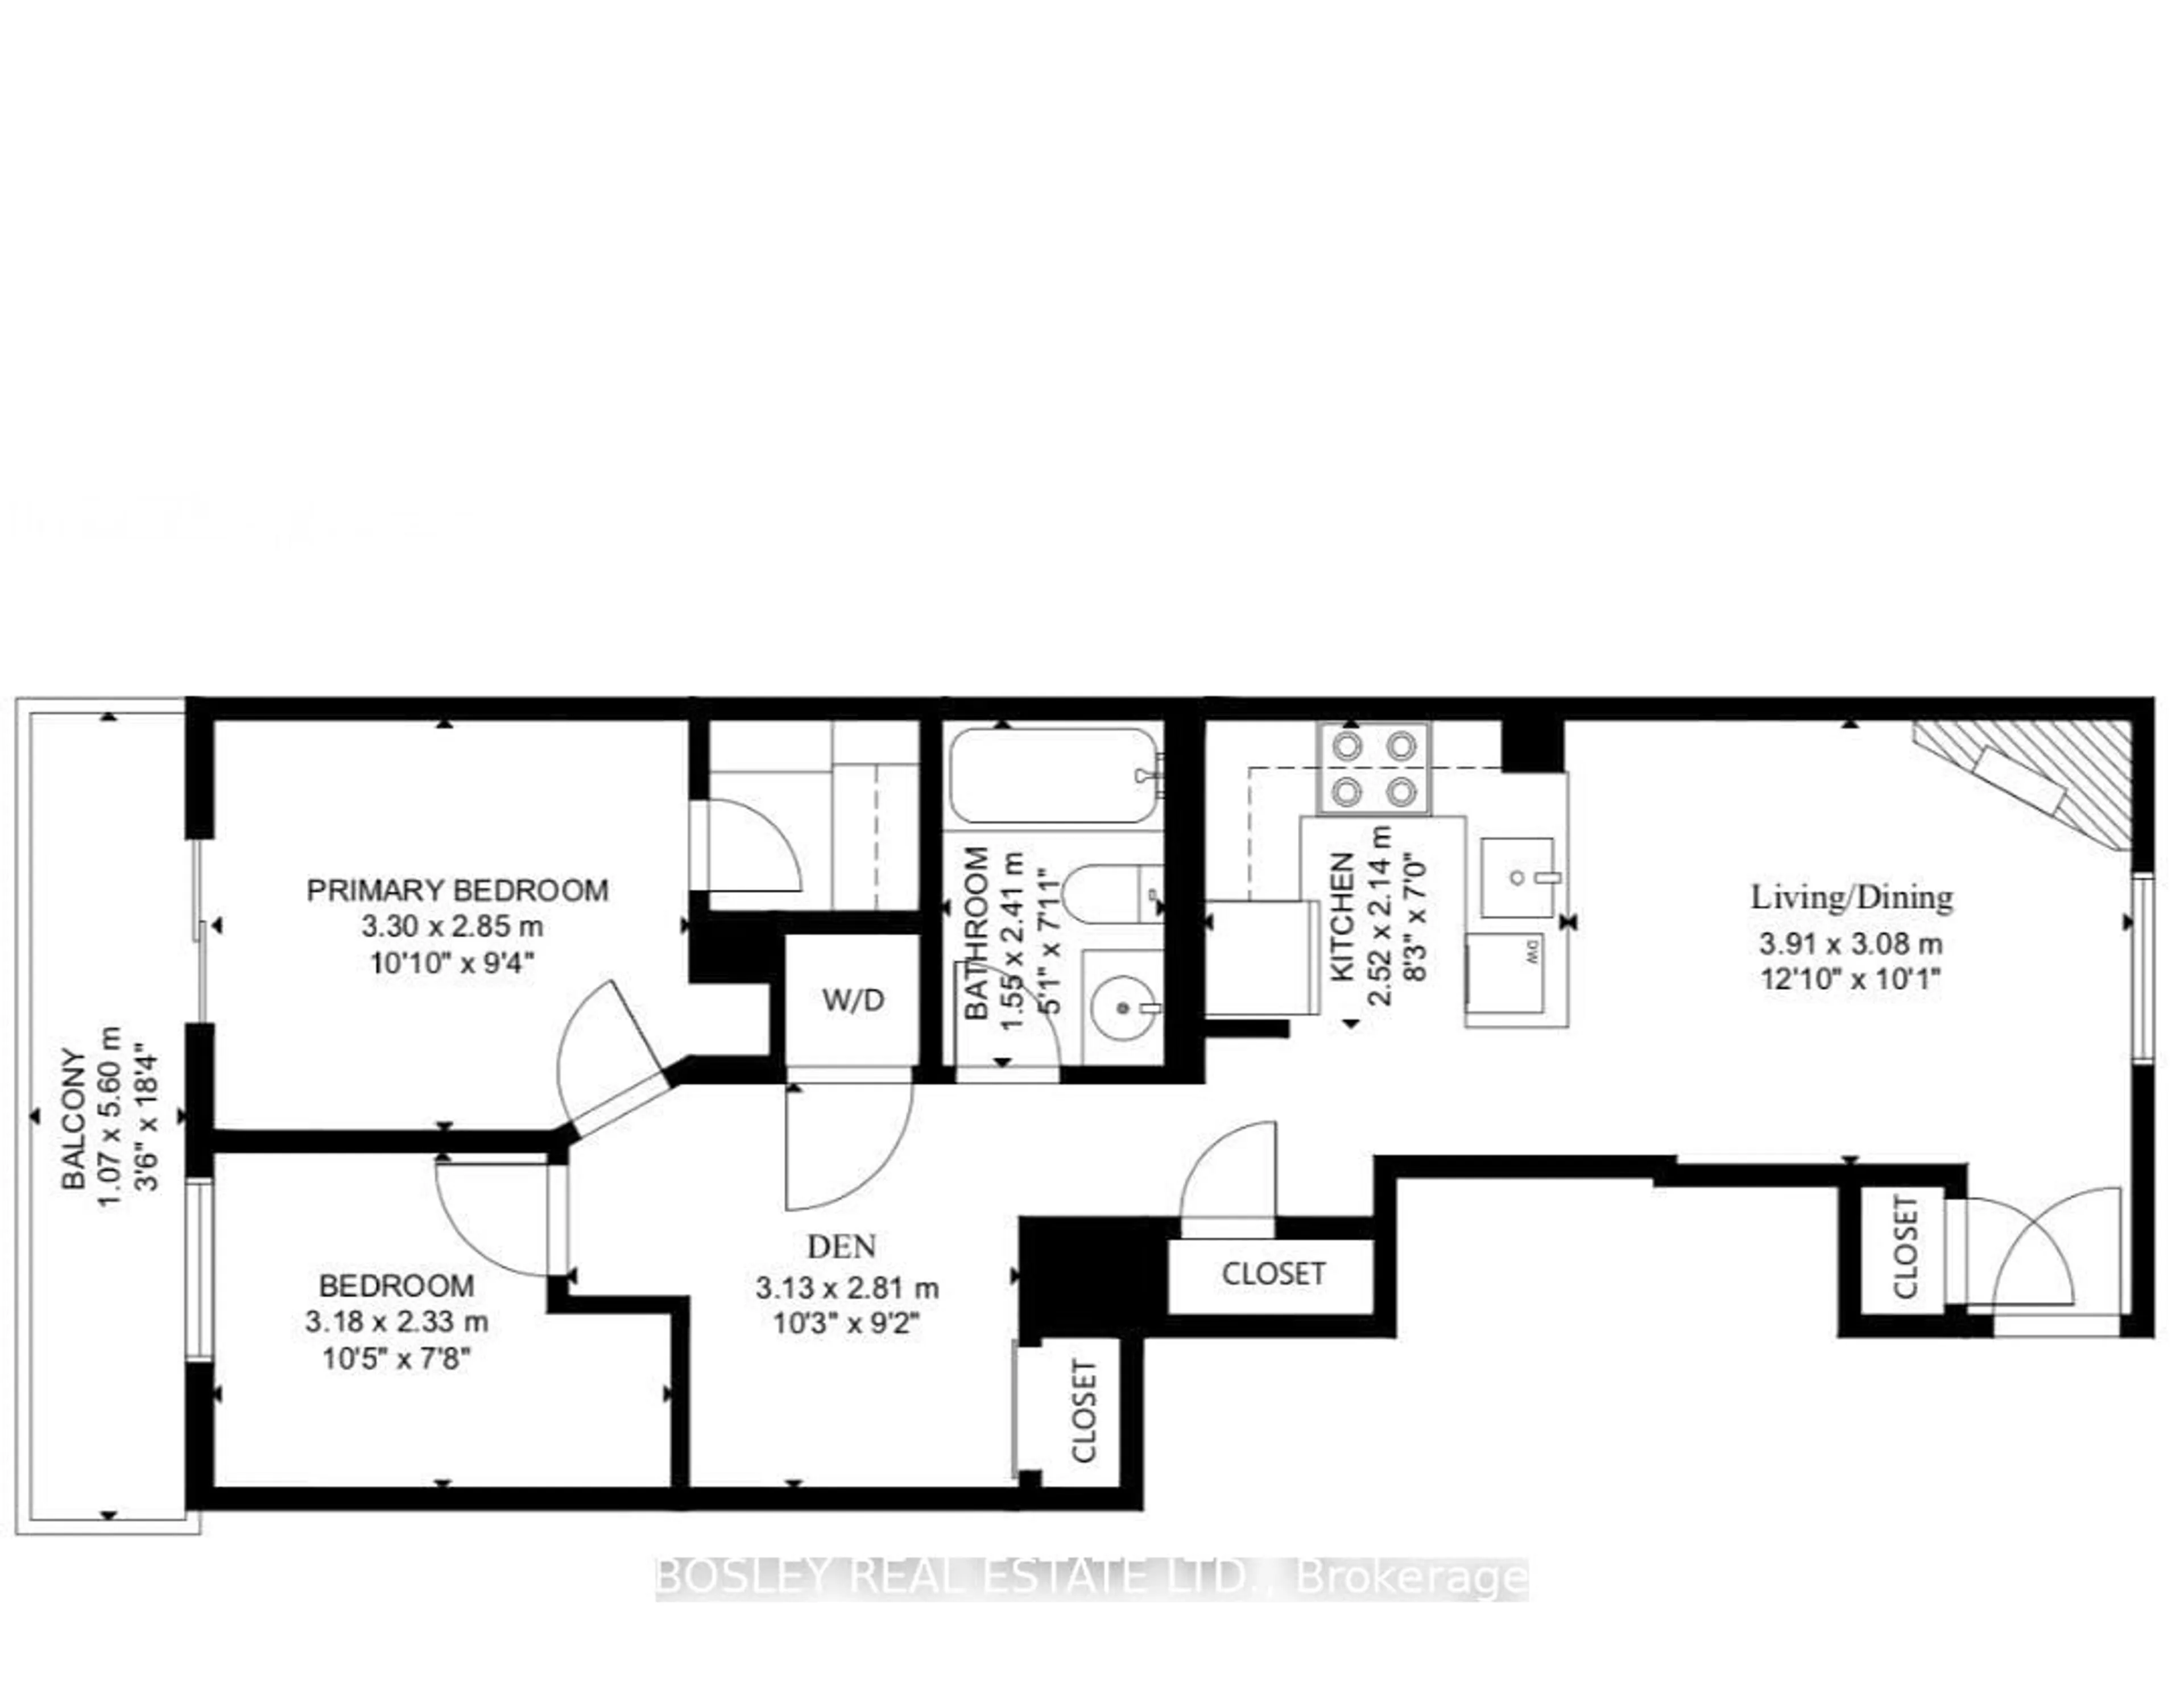 Floor plan for 16 Laidlaw St #924, Toronto Ontario M6K 1X2